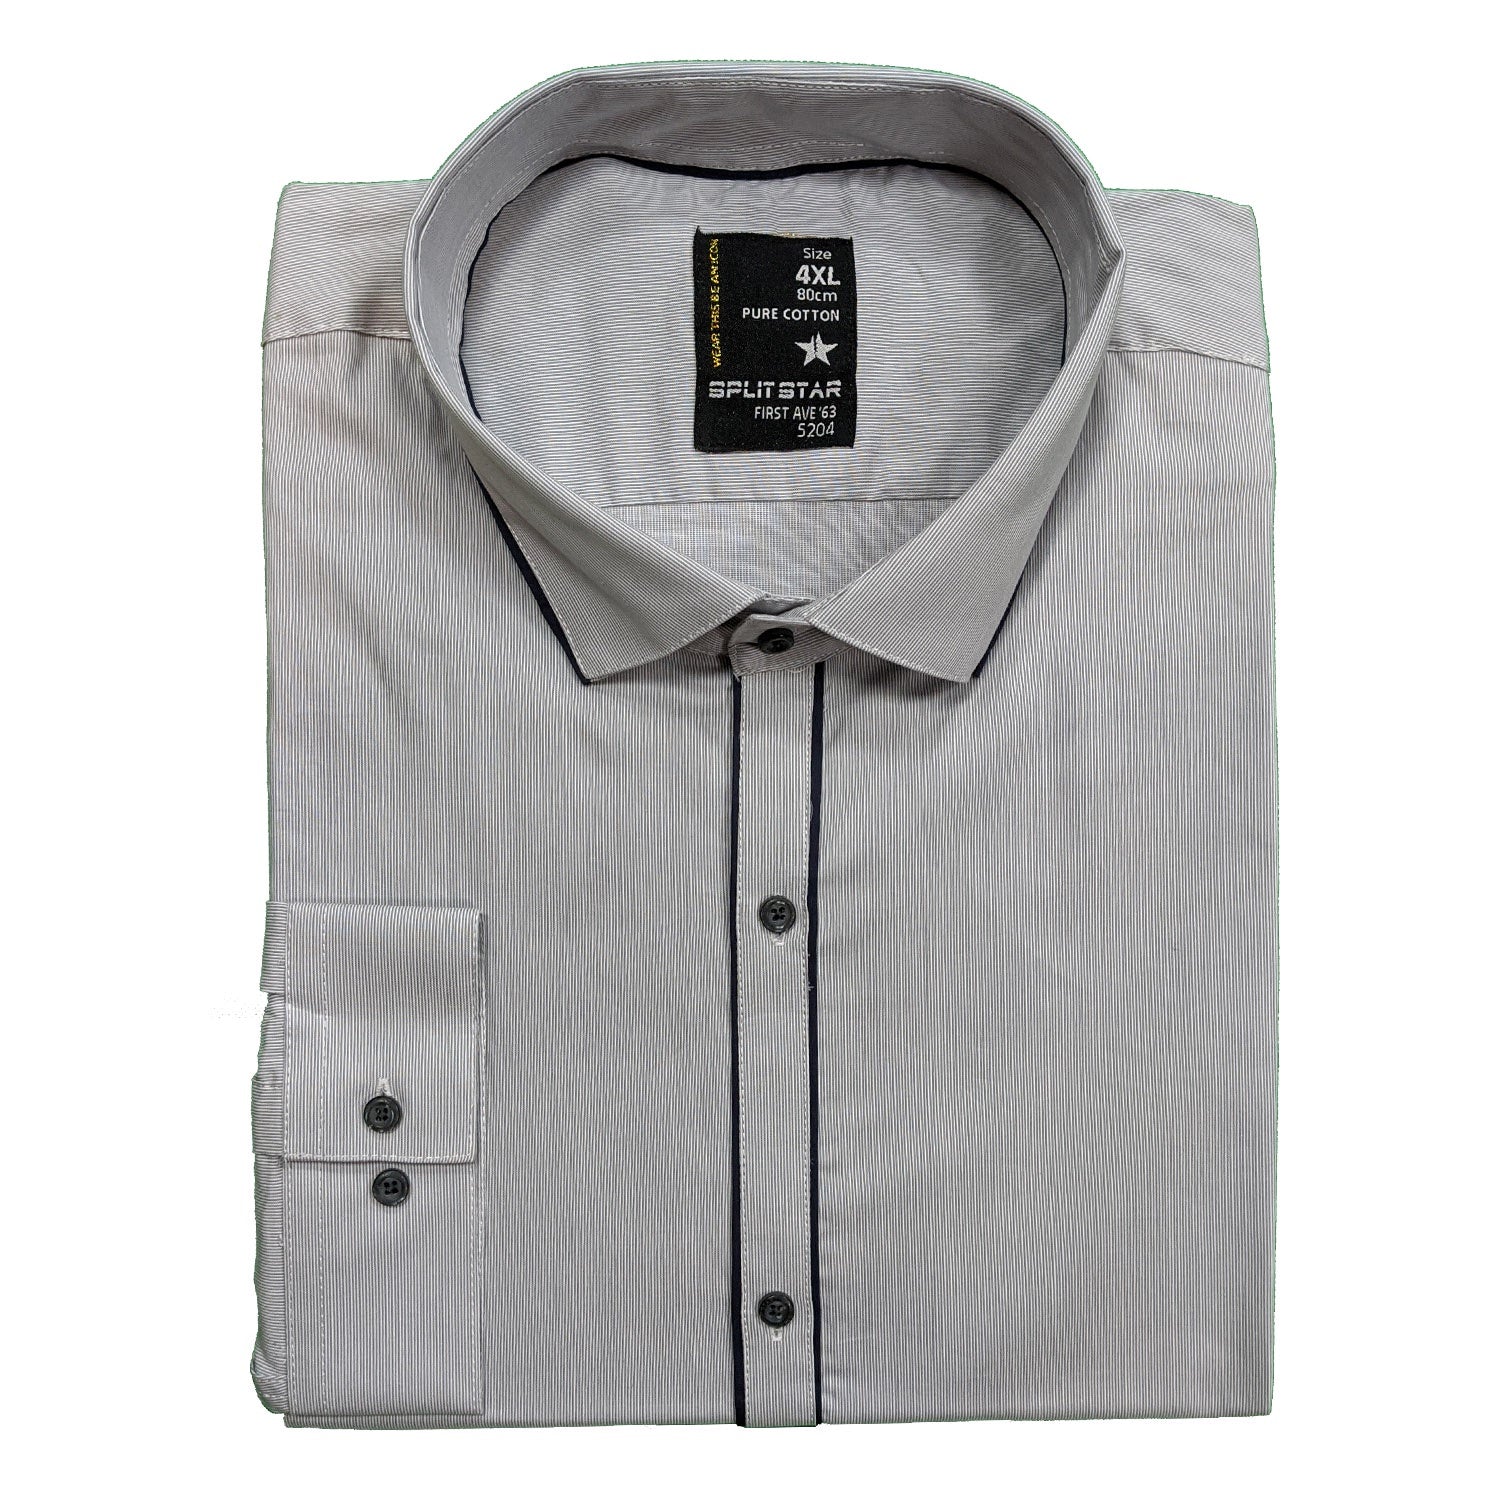 Splitstar L/S Shirt - KS11049 - Absolute - Grey 1